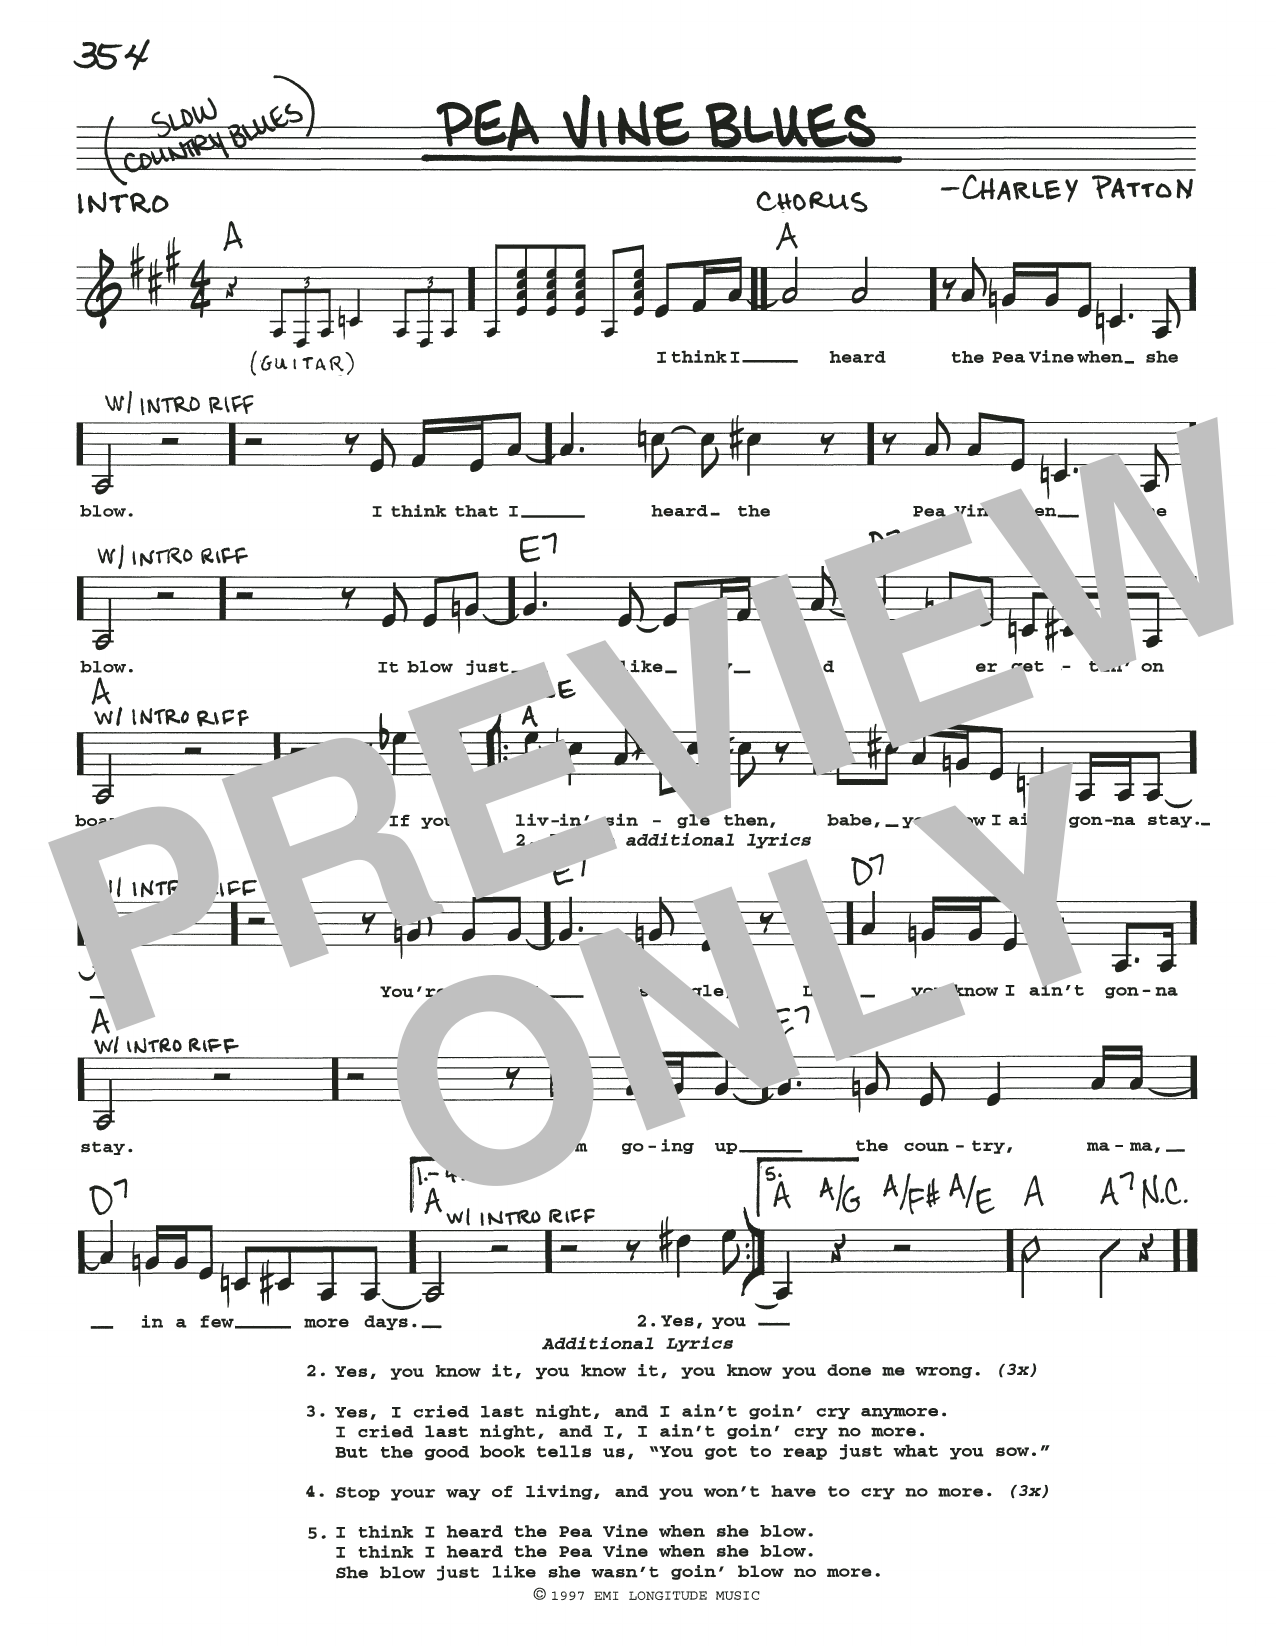 Download Charley Patton Pea Vine Blues Sheet Music